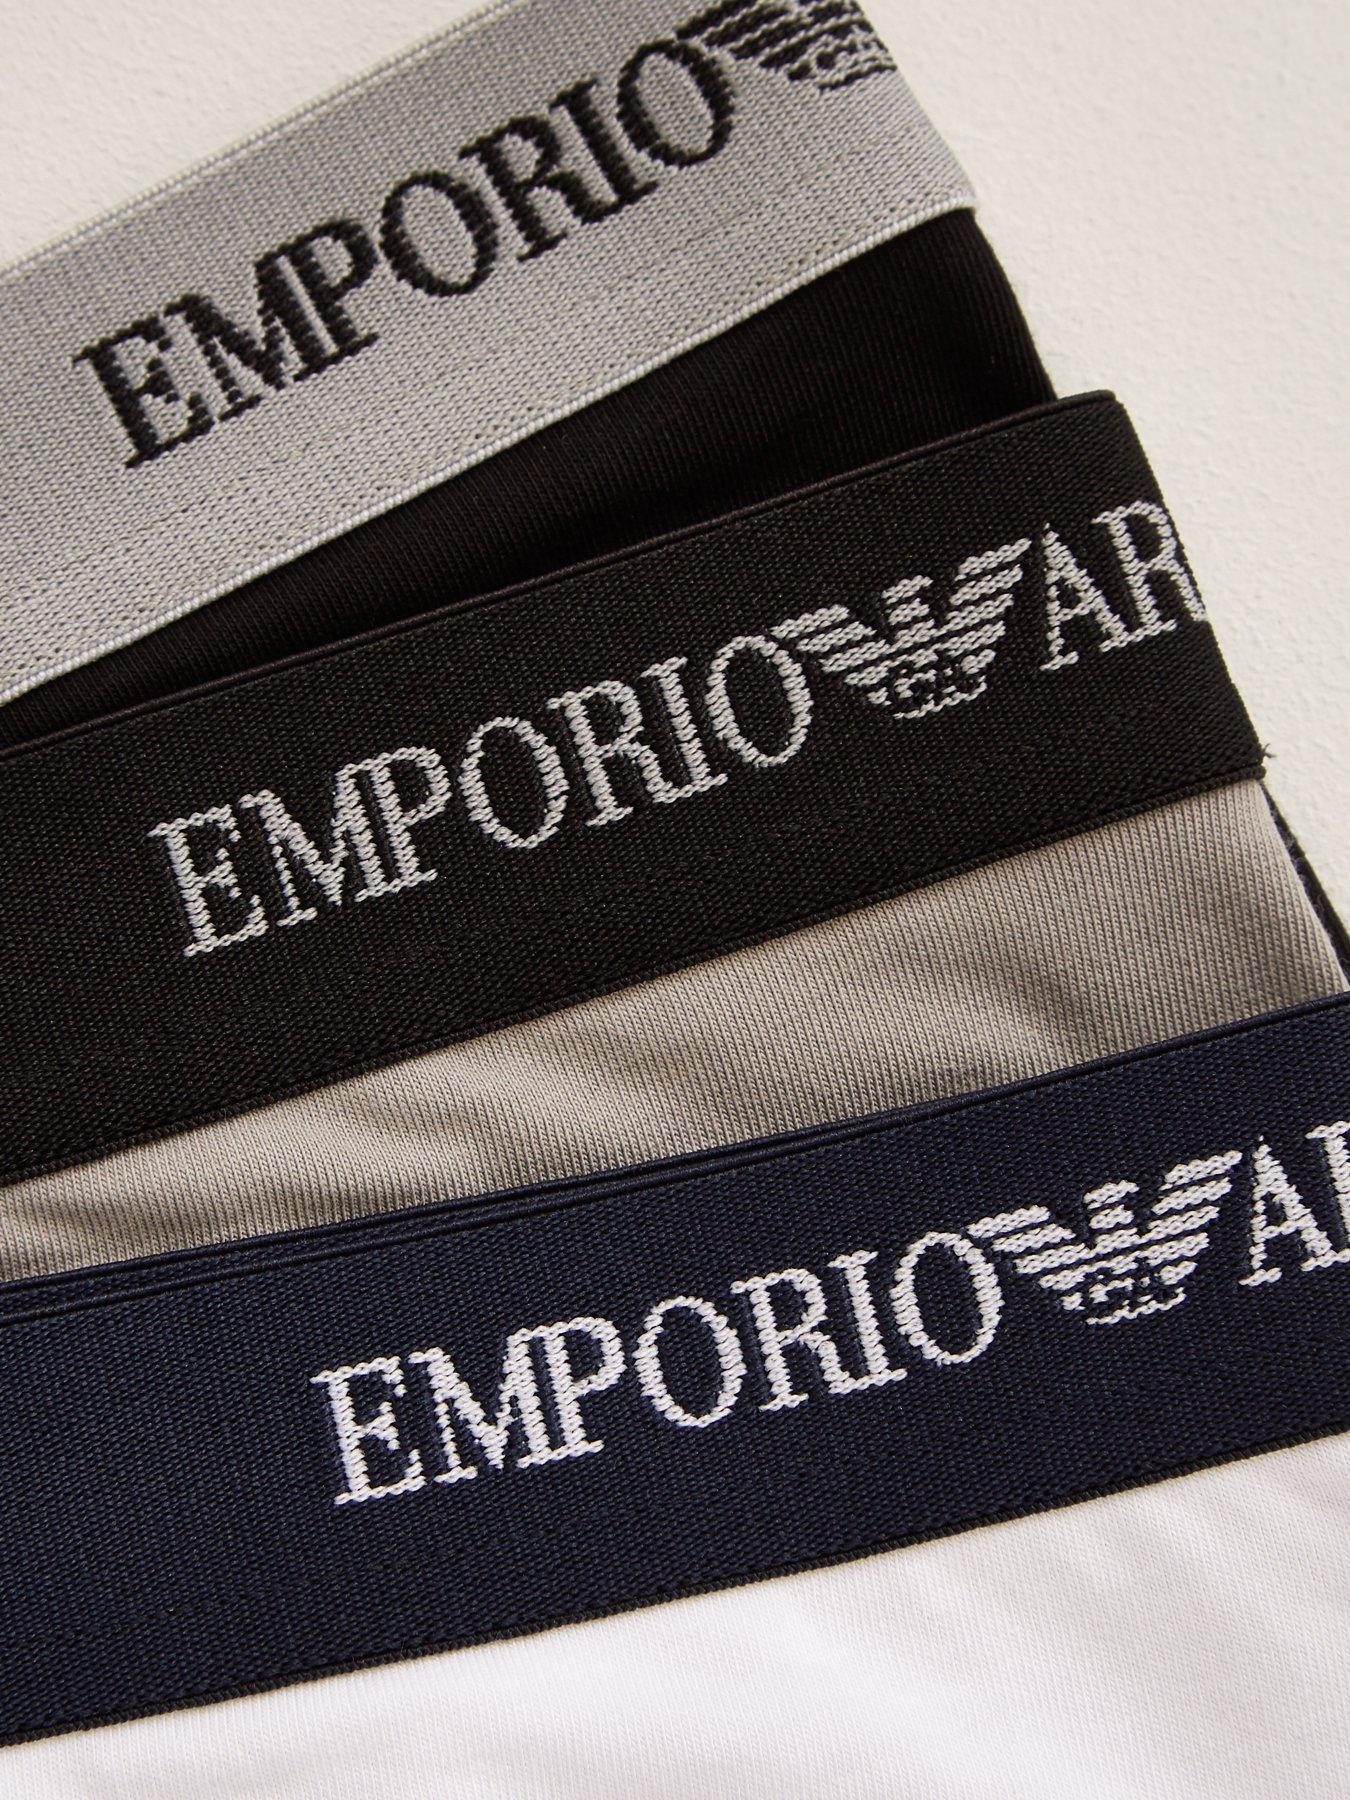  3 Pack Emporio Waistband Stretch Cotton Trunks - Black/Grey/White